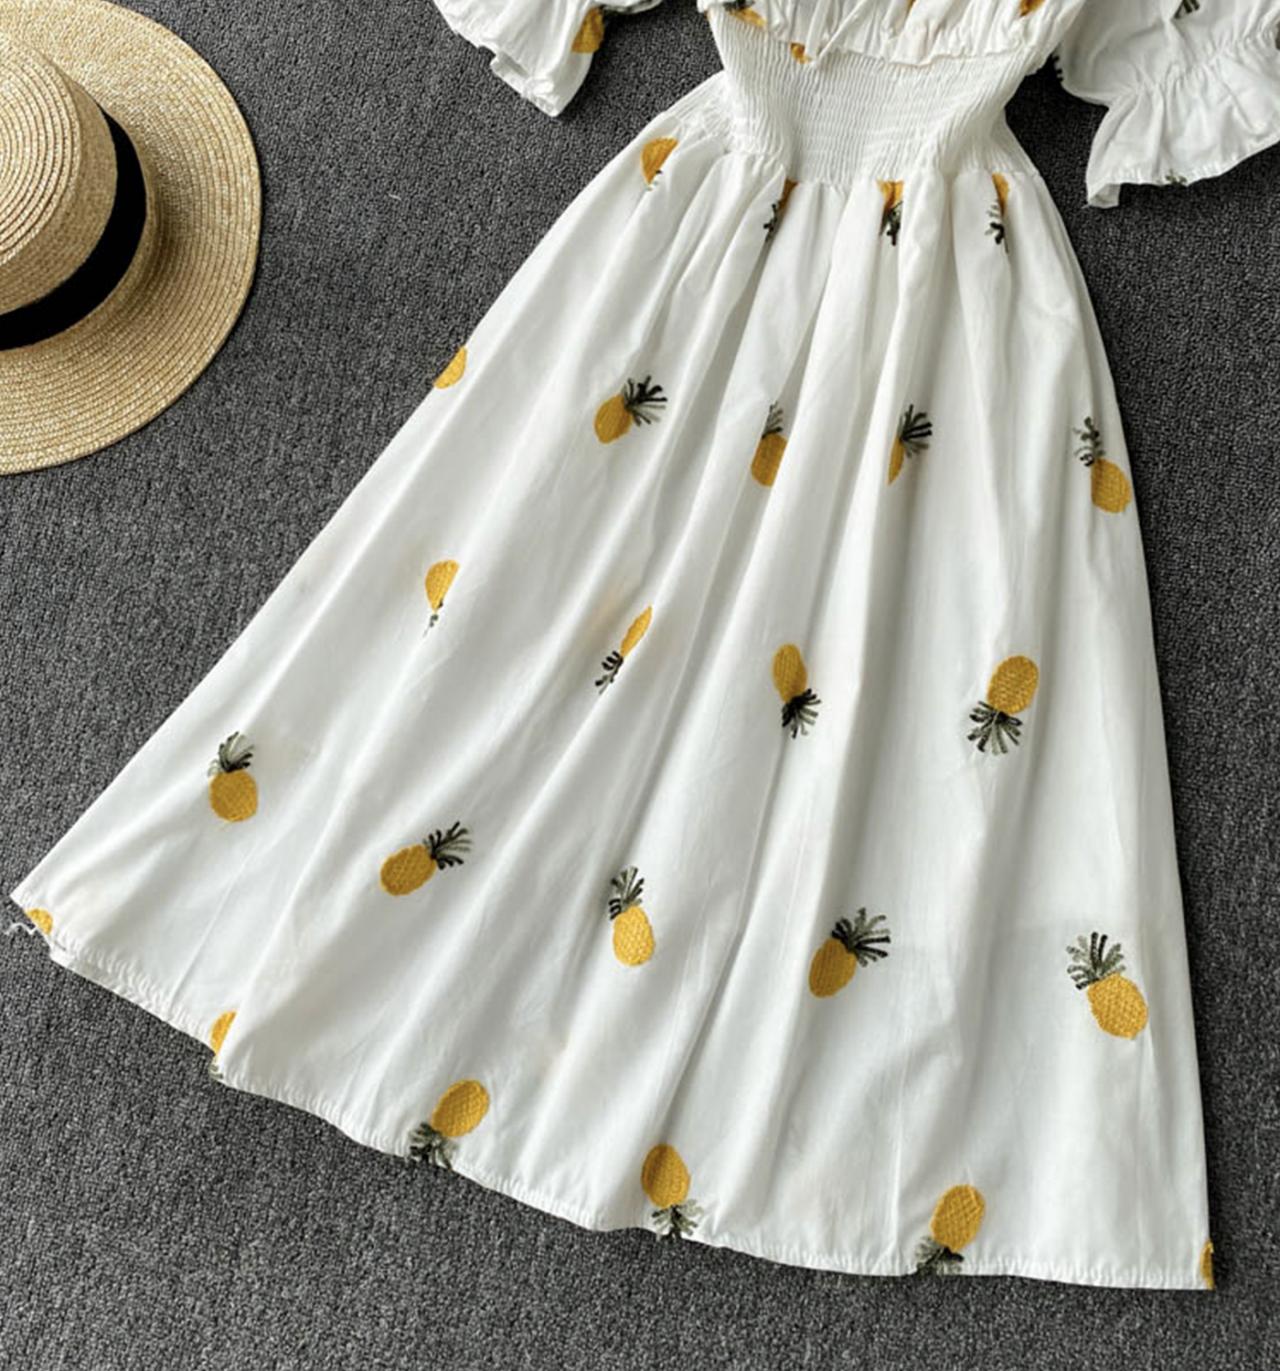 Sweet strawberry dress cherry dress pineapple dress  709